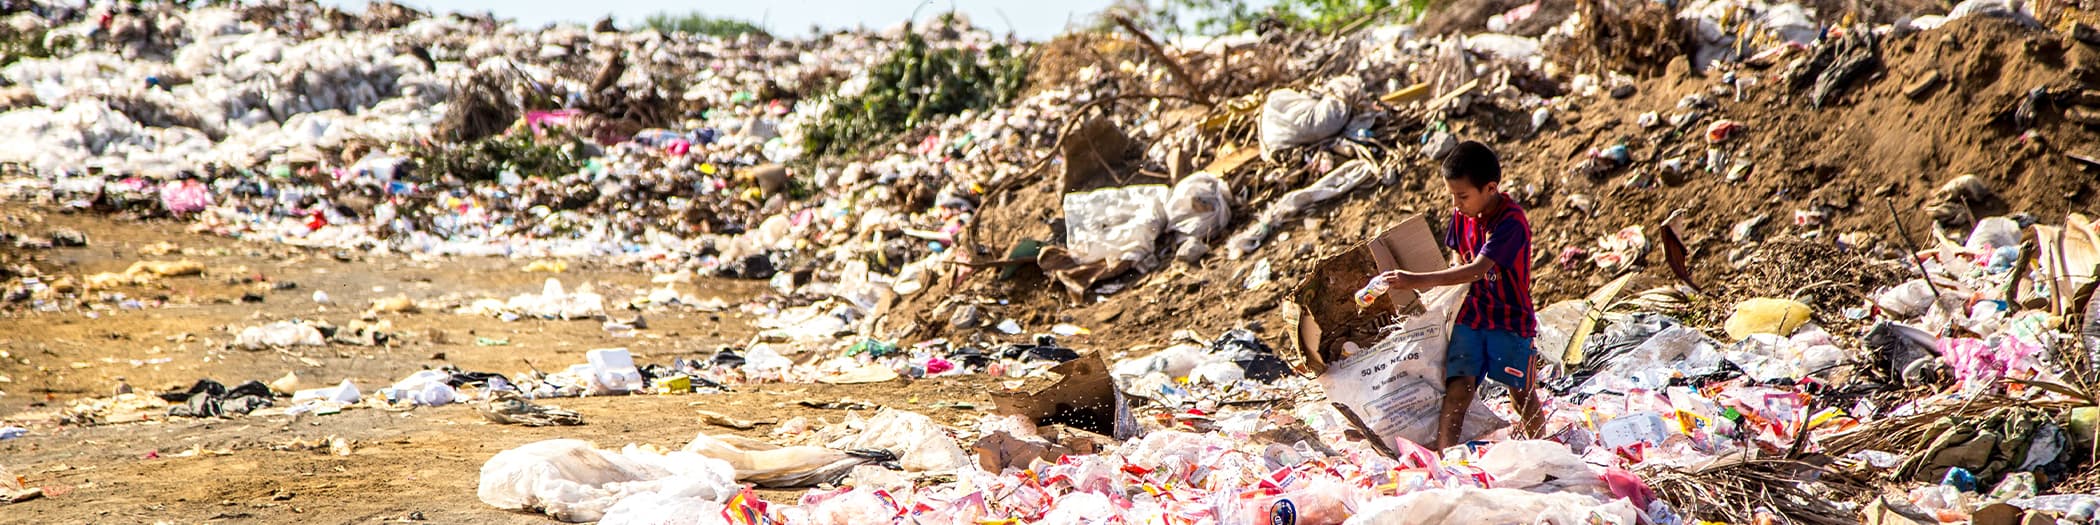 child in landfill site